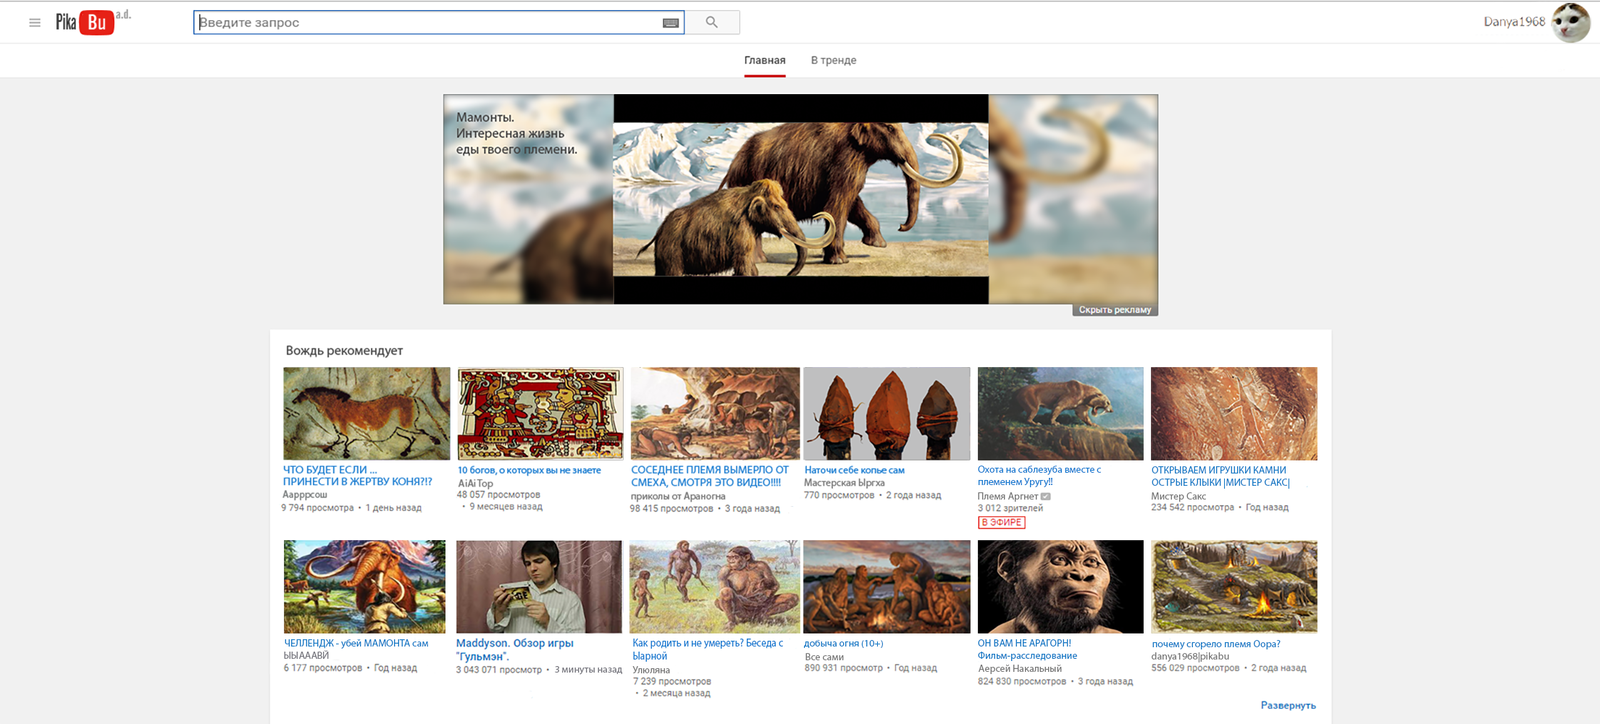 prehistoric youtube. - Photoshop, Youtube, Internet, Prehistoric era, My